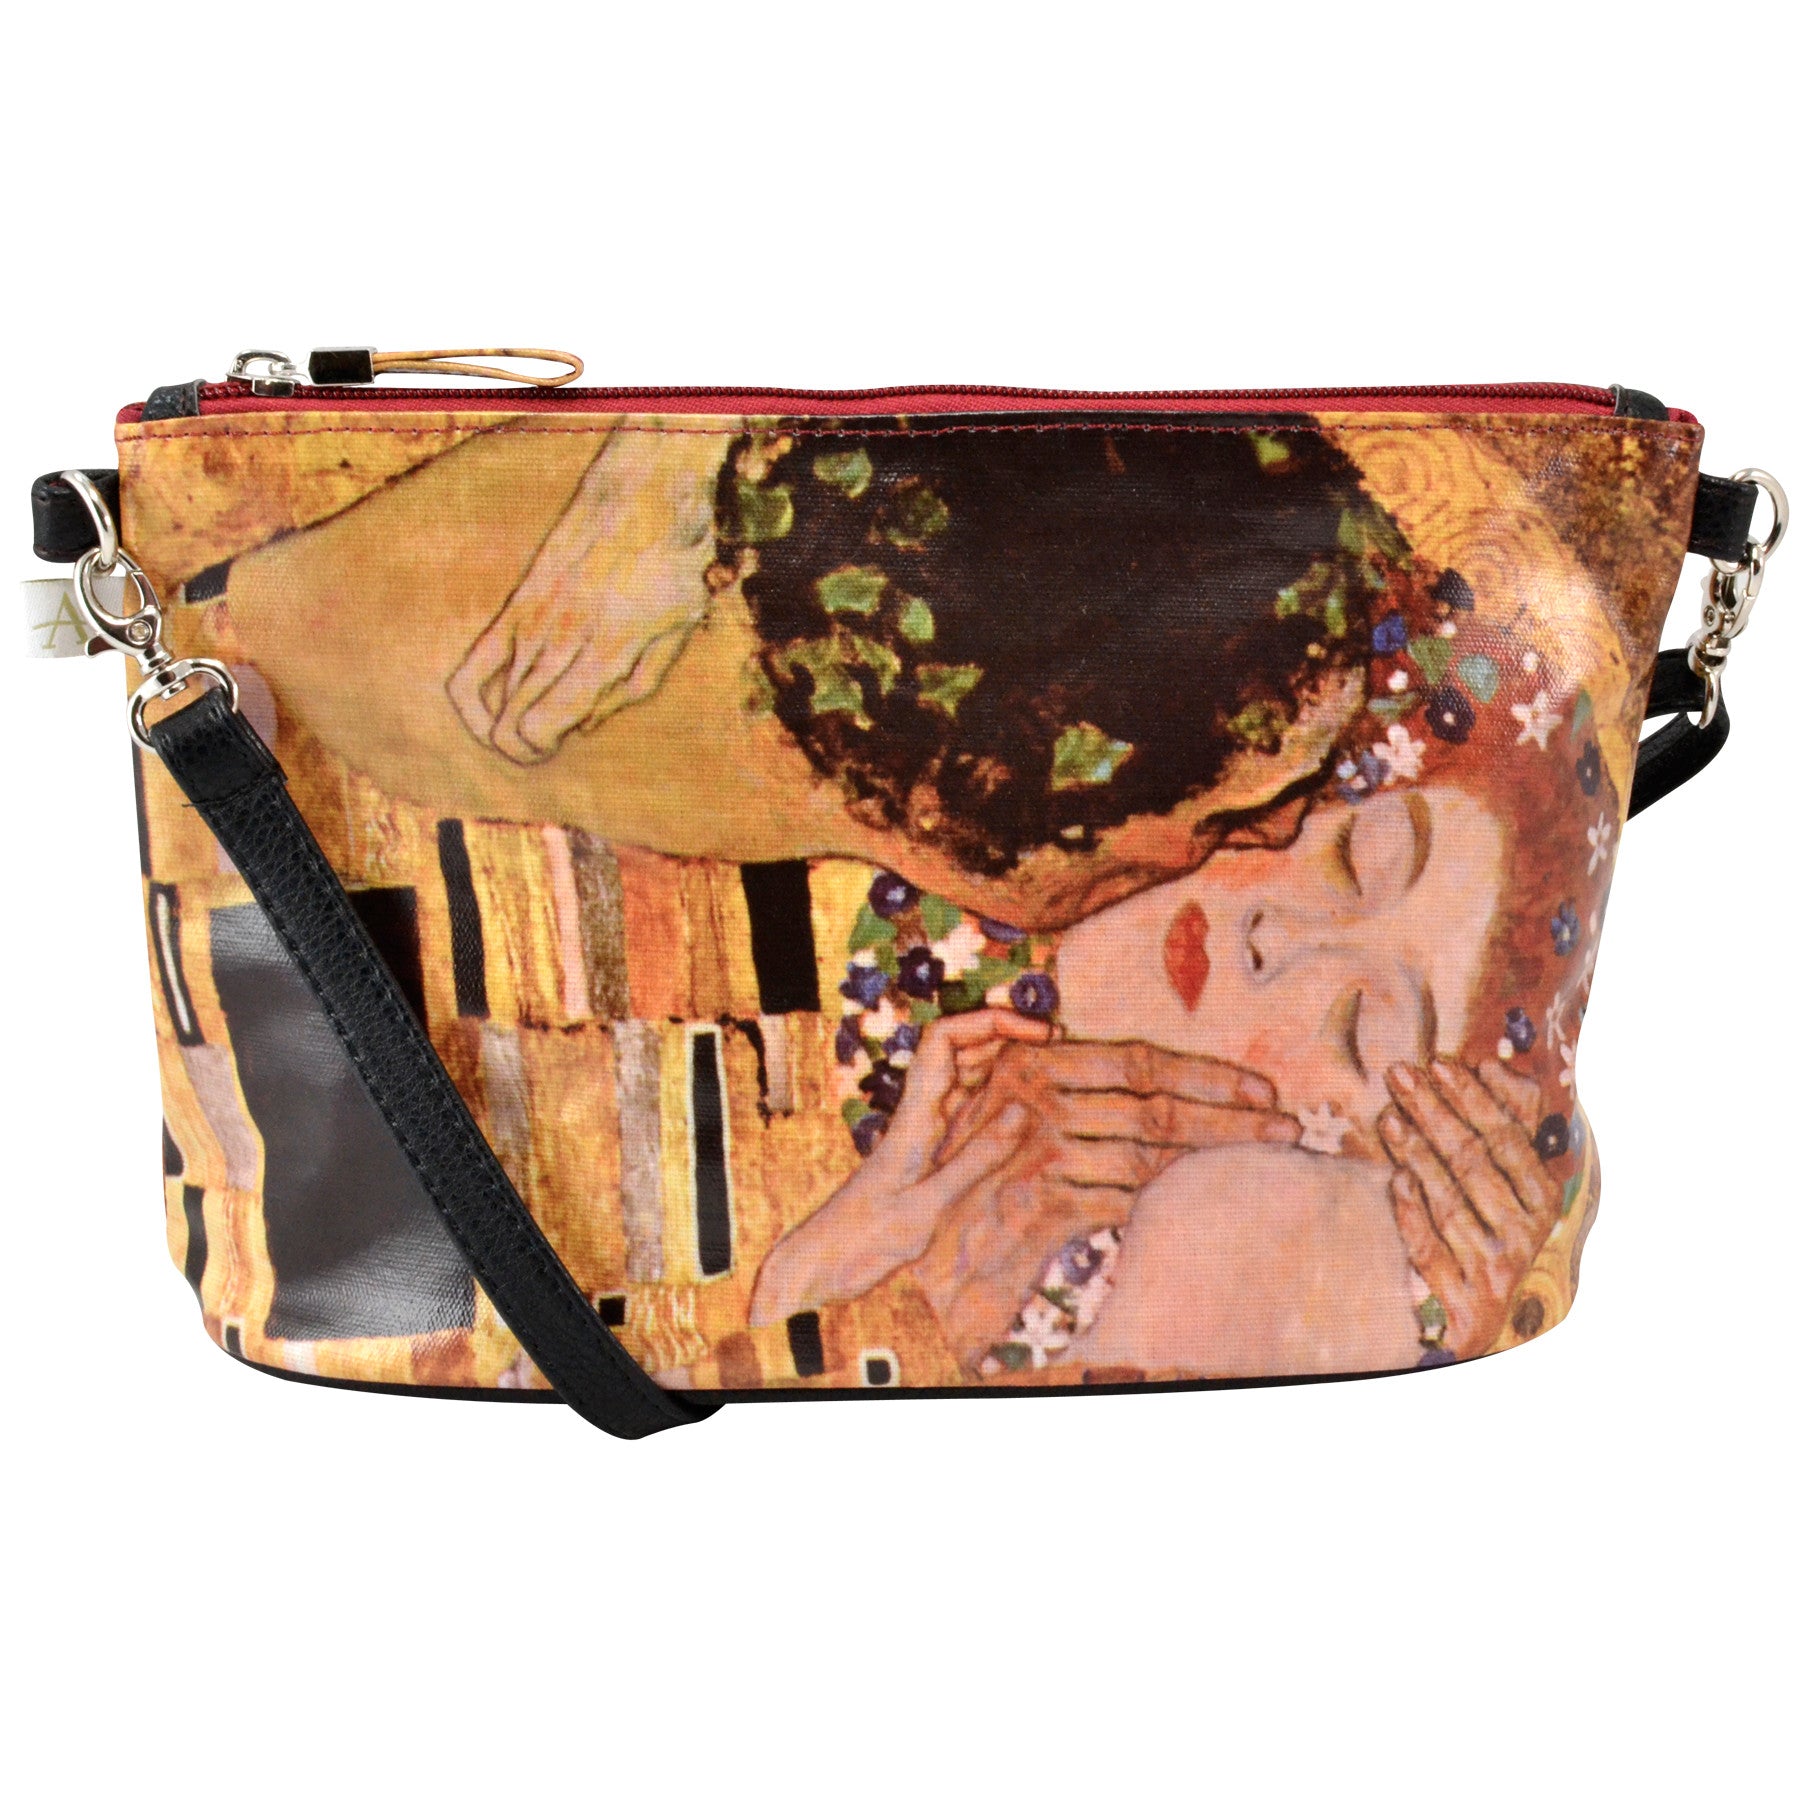 Alicia Klein small crossbody bag, Klimt's The Kiss